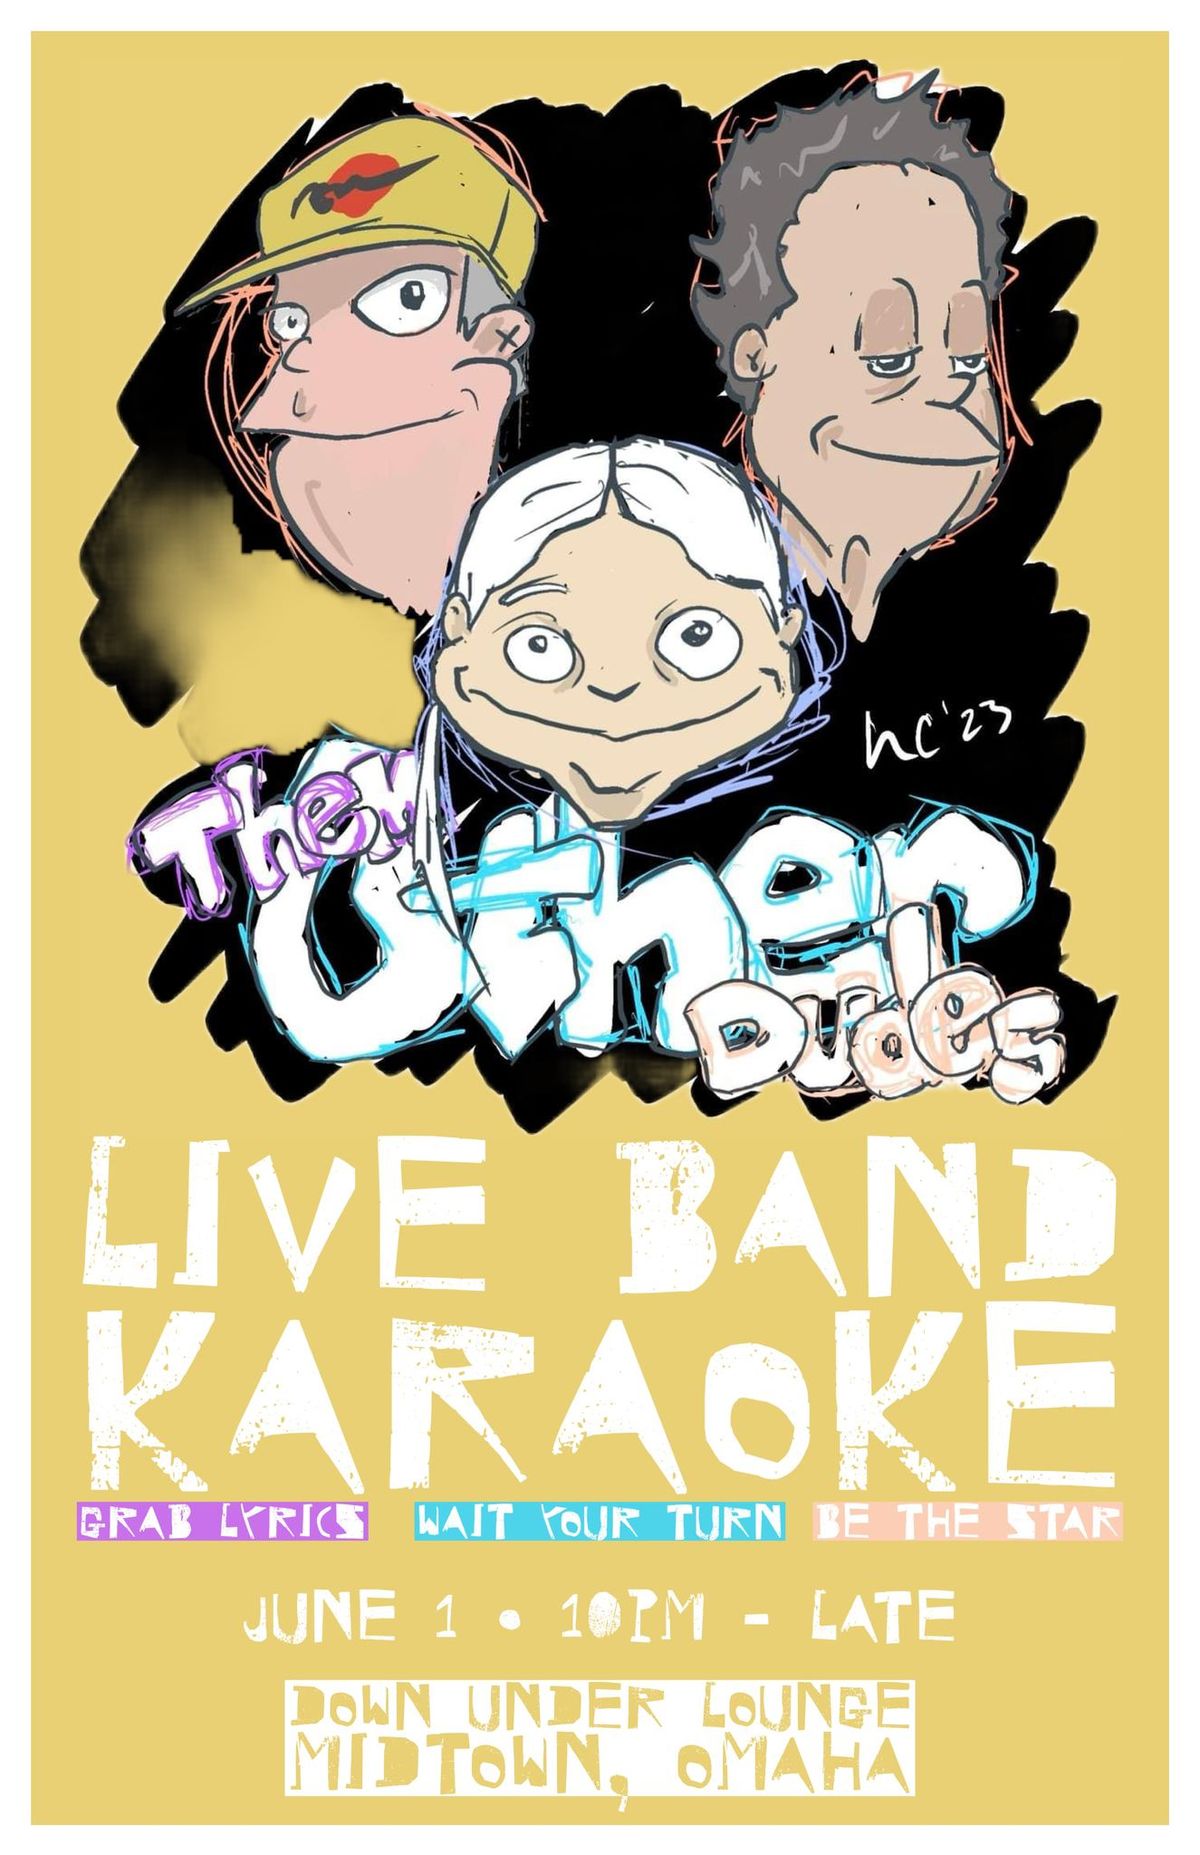 LIVE BAND Karaoke RETURNS!